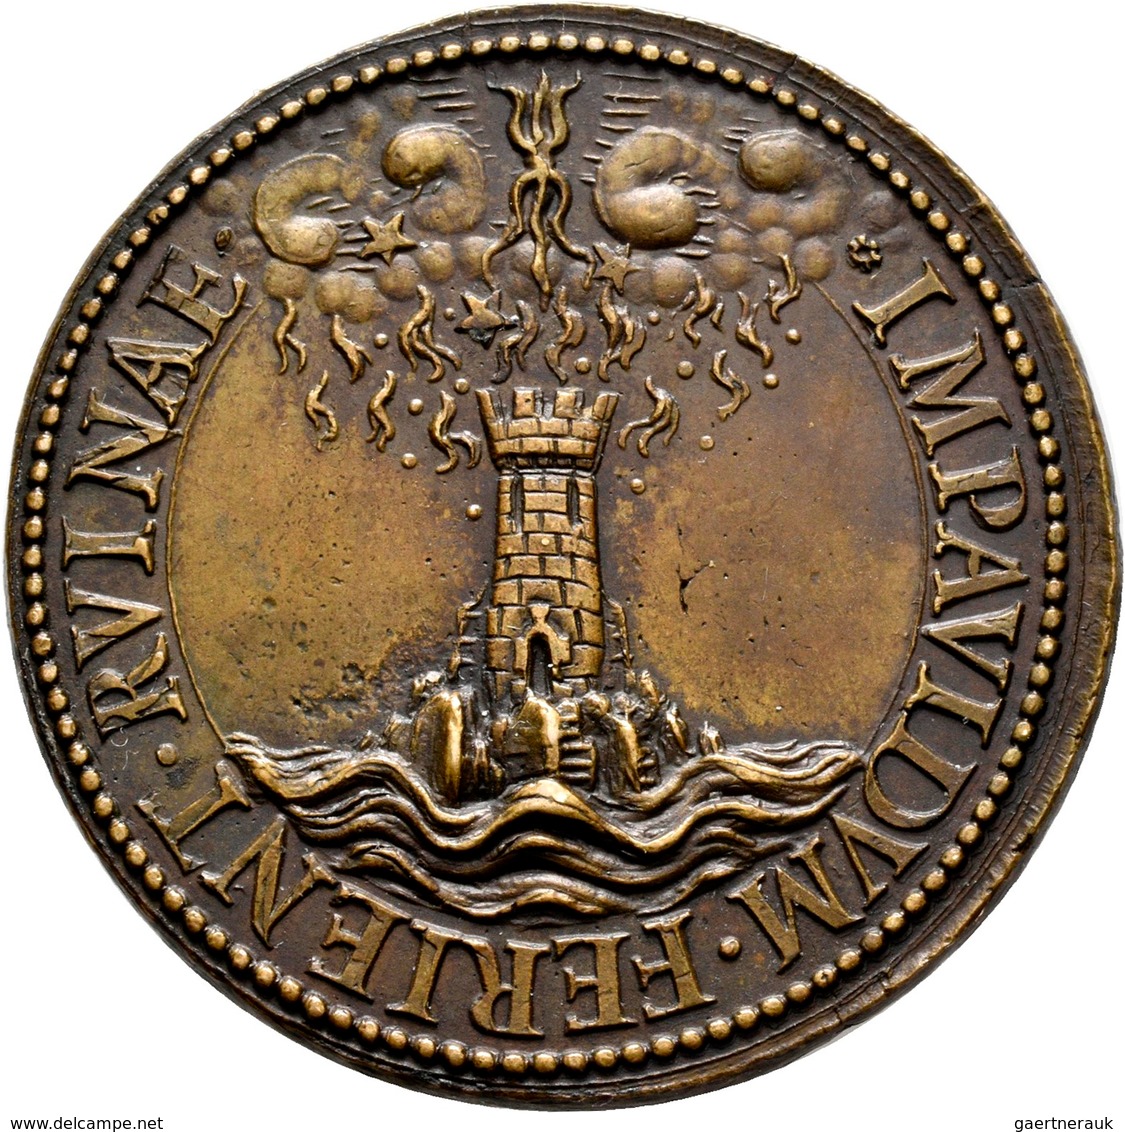 Medaillen Alle Welt: Frankreich, Michel De L'Hopital 1505-1573:Bronzemedaille O.J., Unsigniert, Auf - Non Classés